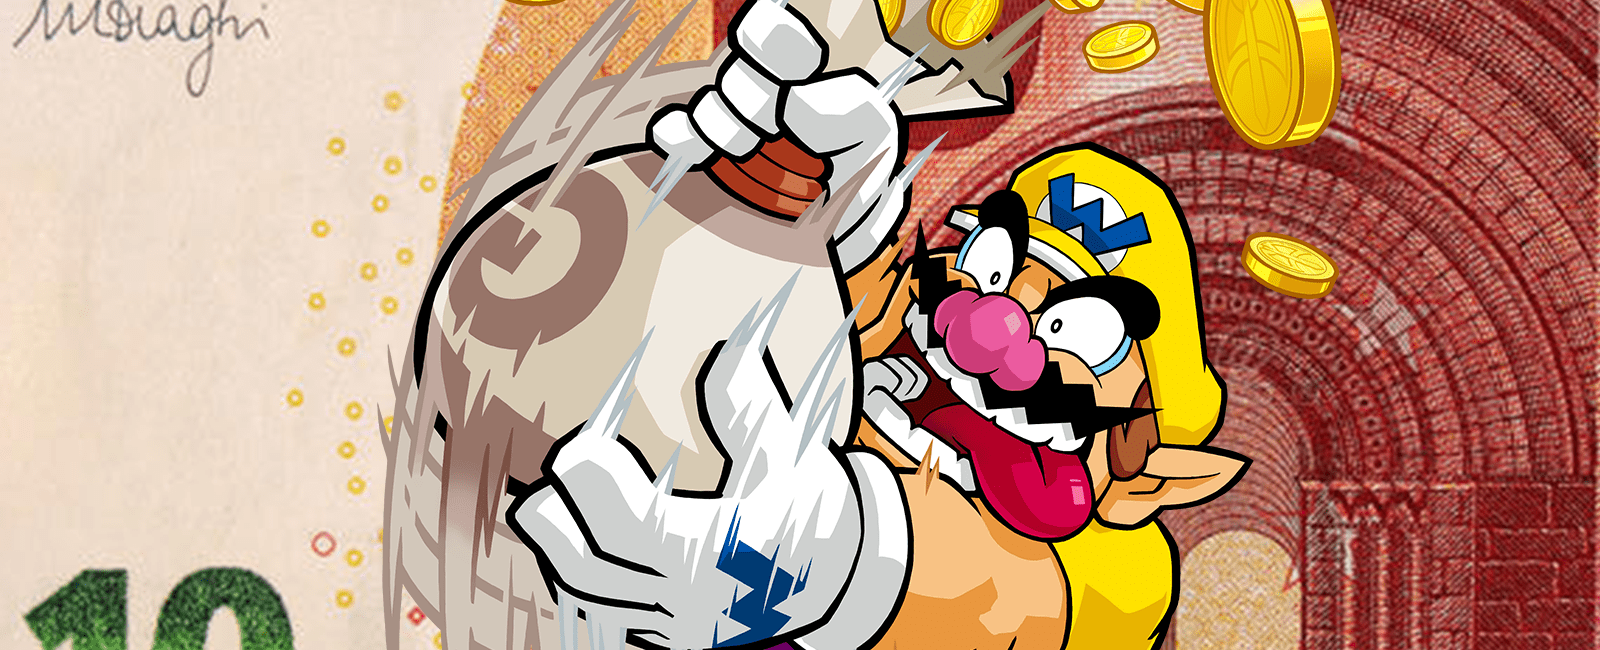 Nintendo-personage Wario zoekt goedkope Nintendo Switch-games